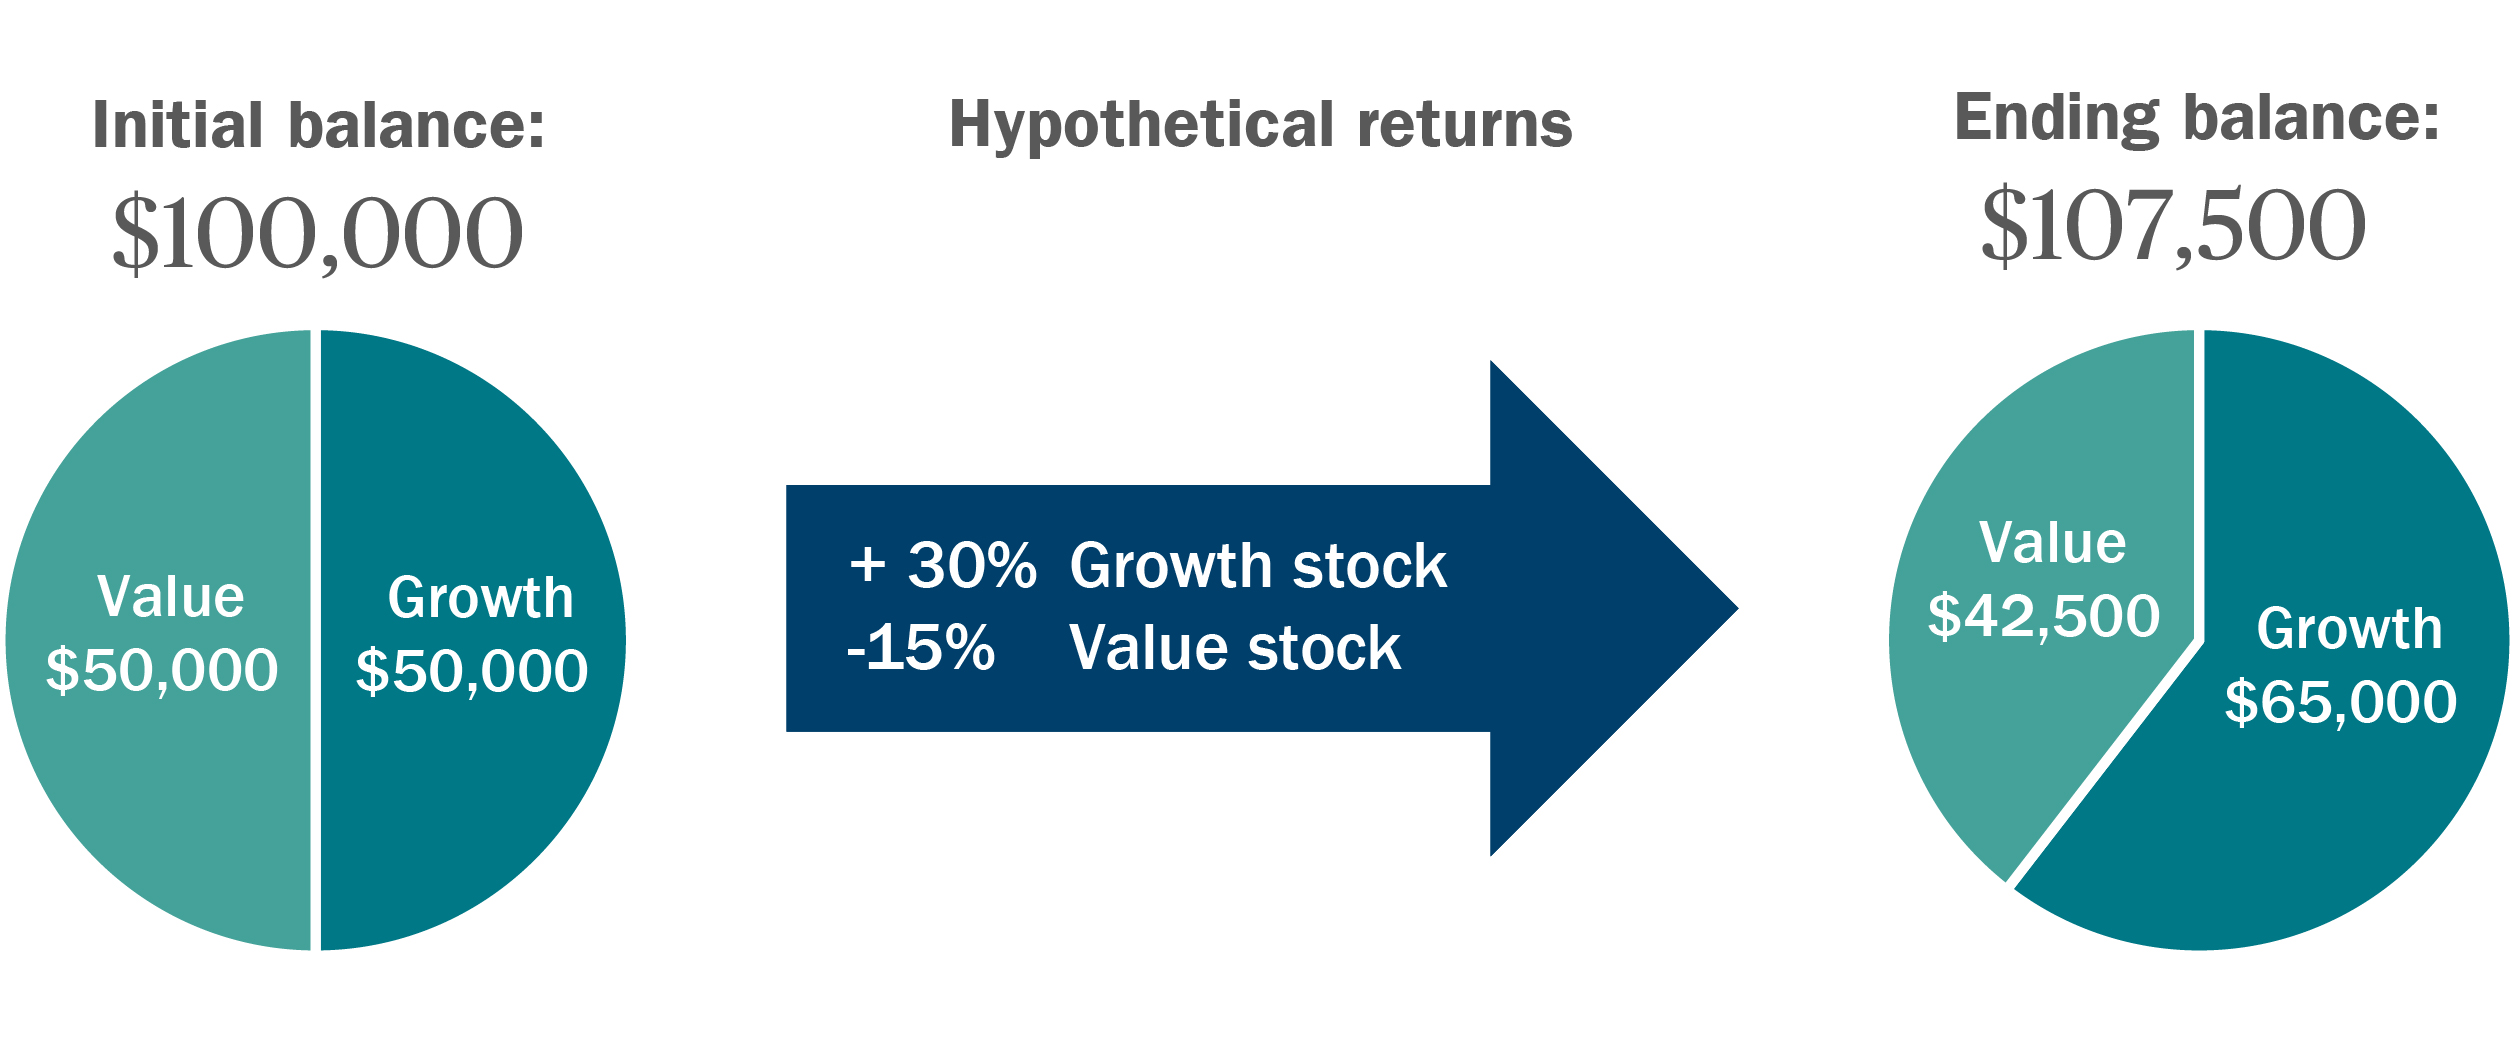 Tax-loss harvesting hypothetical returns